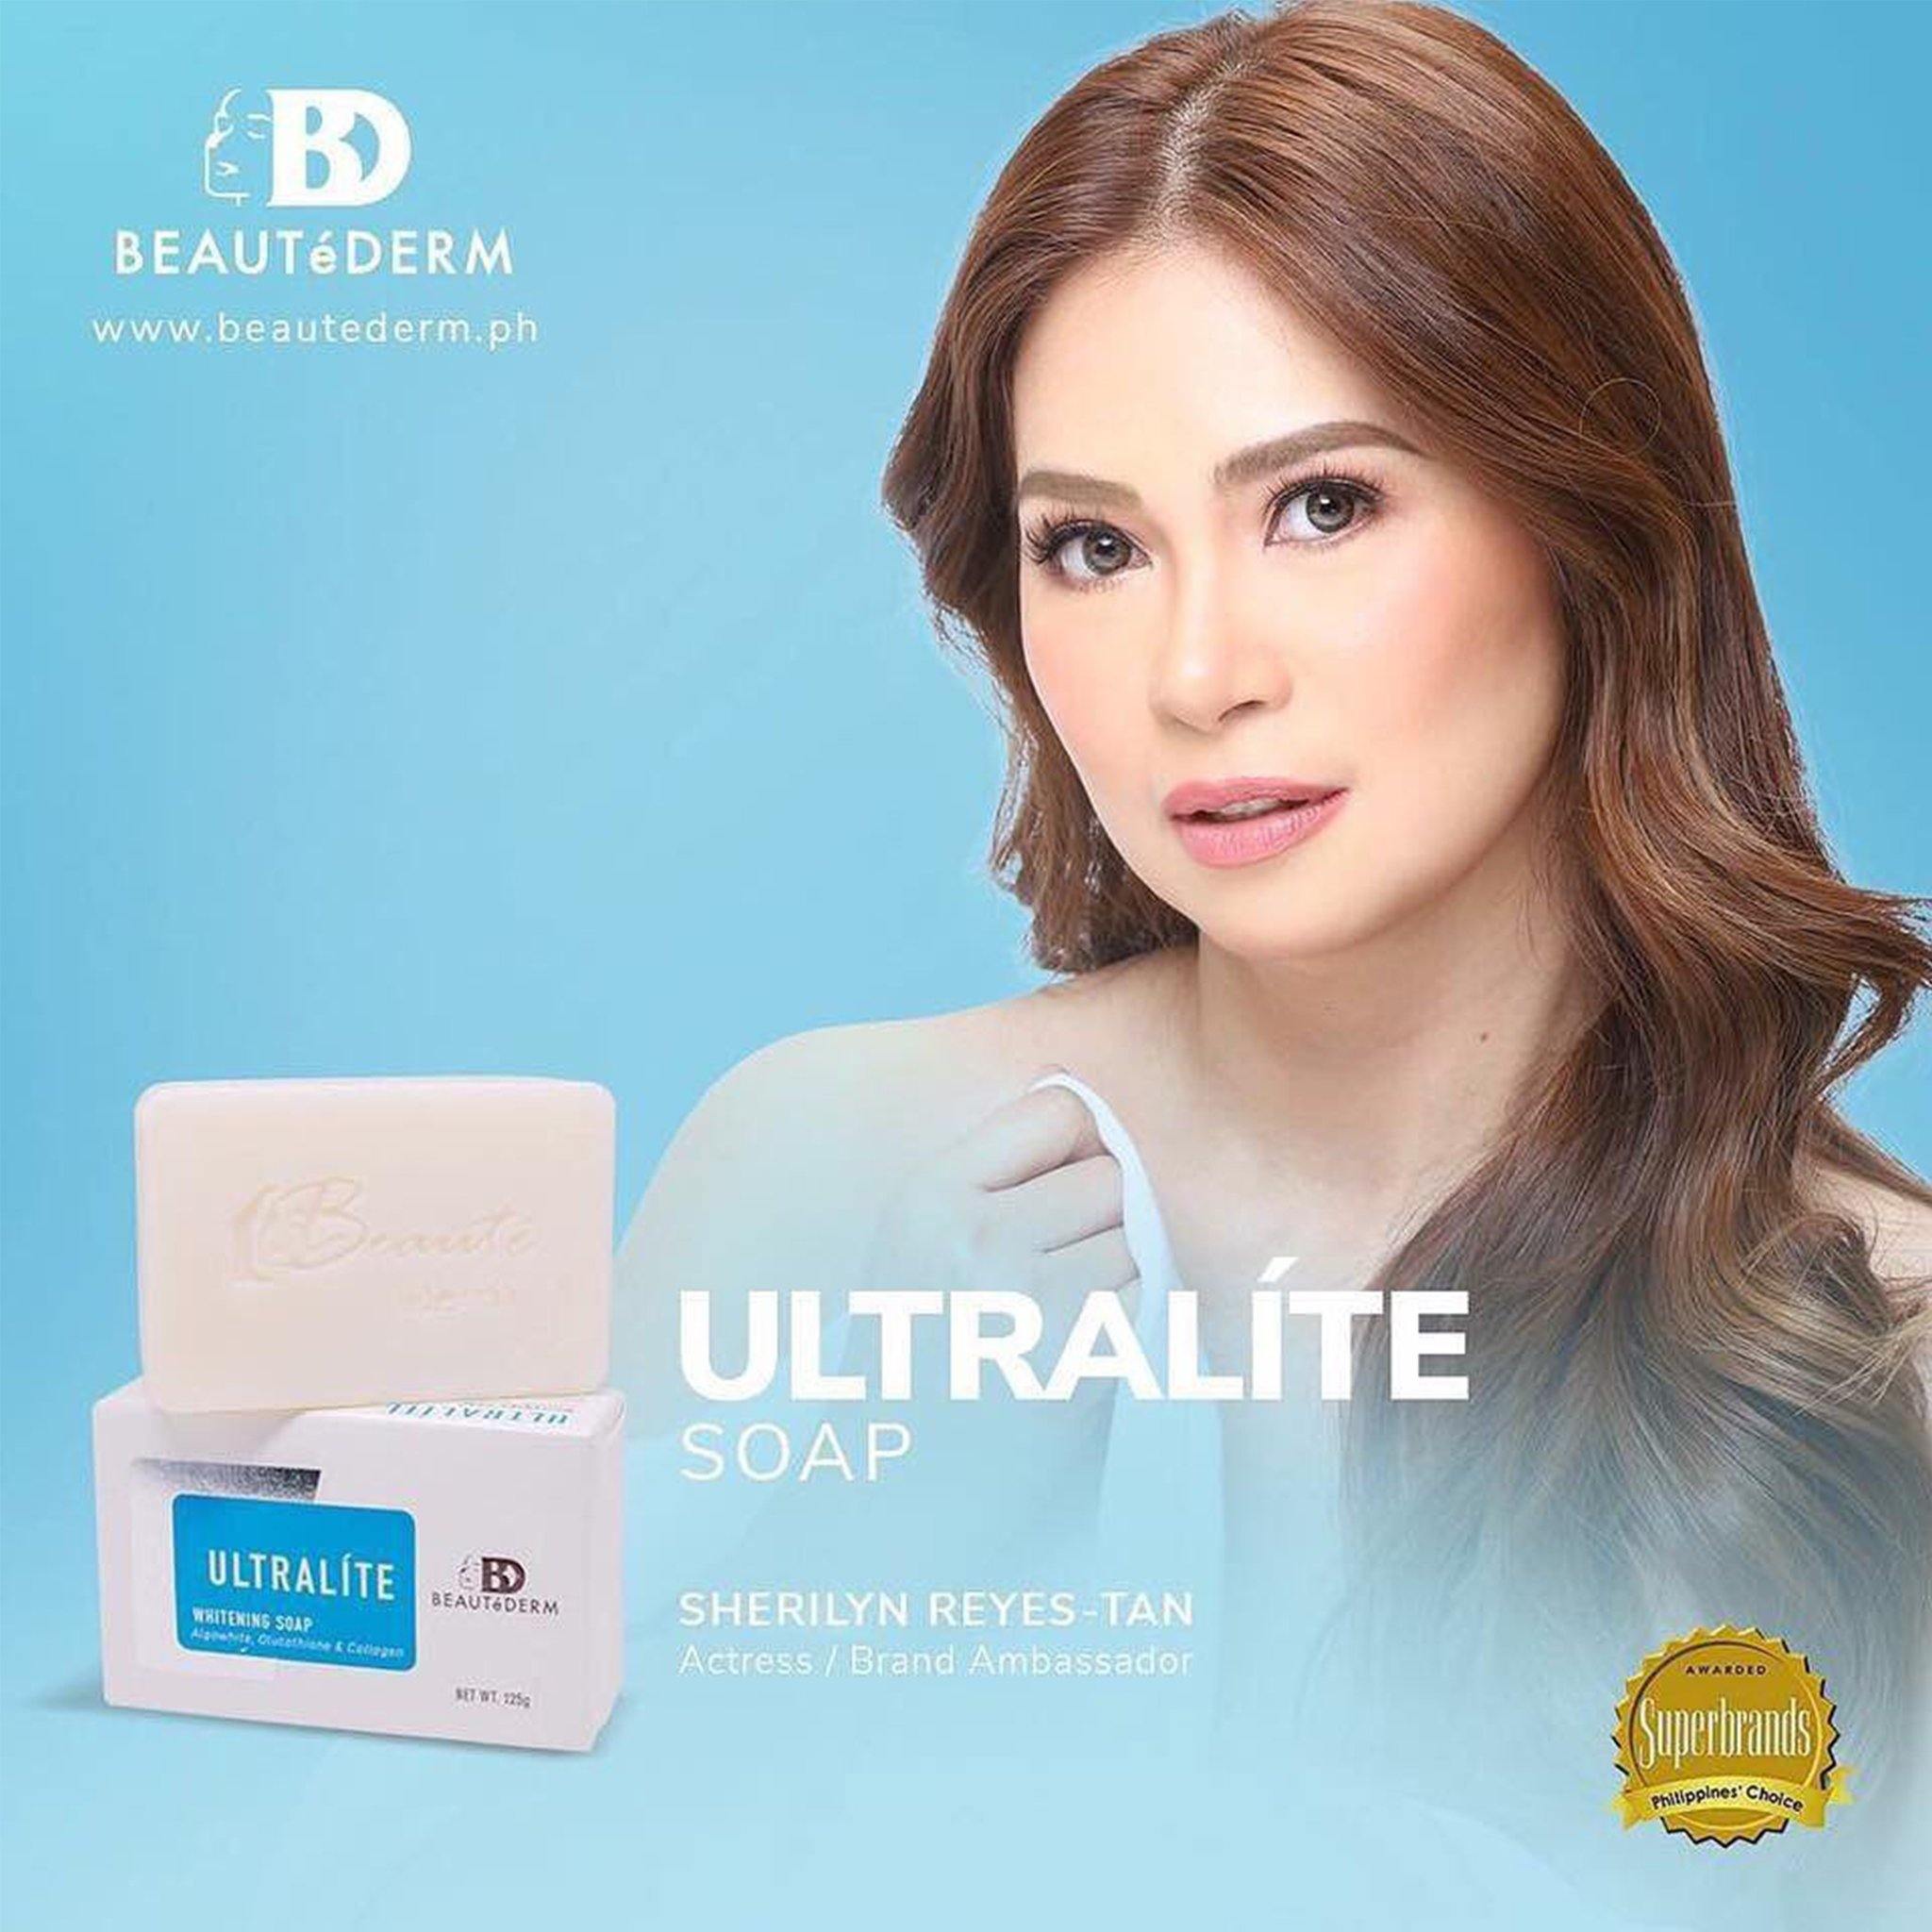 Ultralie Whitening Soap (with Algowhite, Glutathione & Collagen), 125g, by Beautederm, with Sherilyn Reyes-Tan (Beautederm Ambassador)